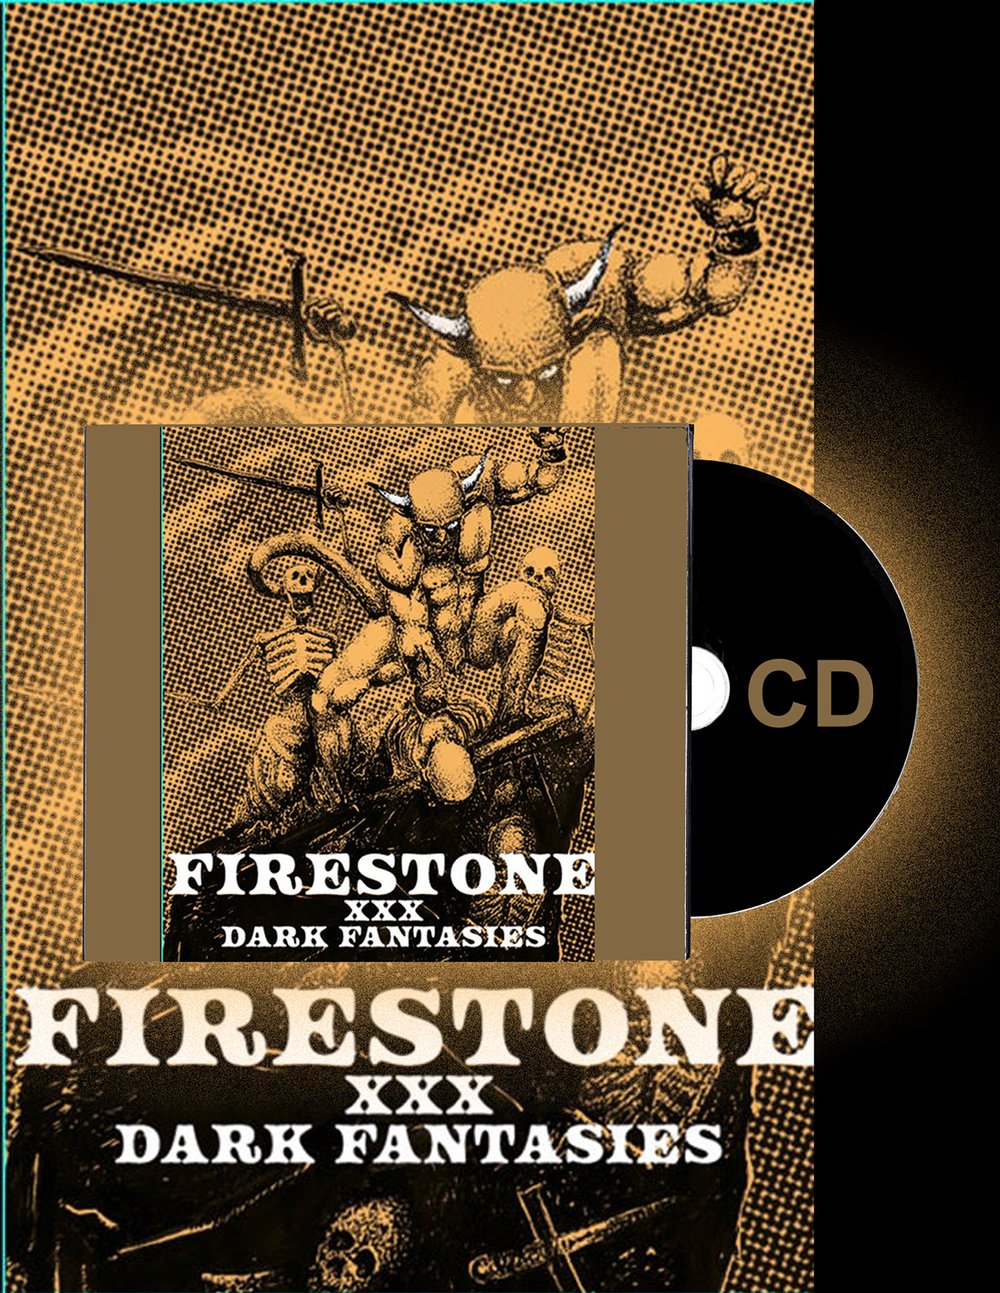 FIRESTONE "demo' CD